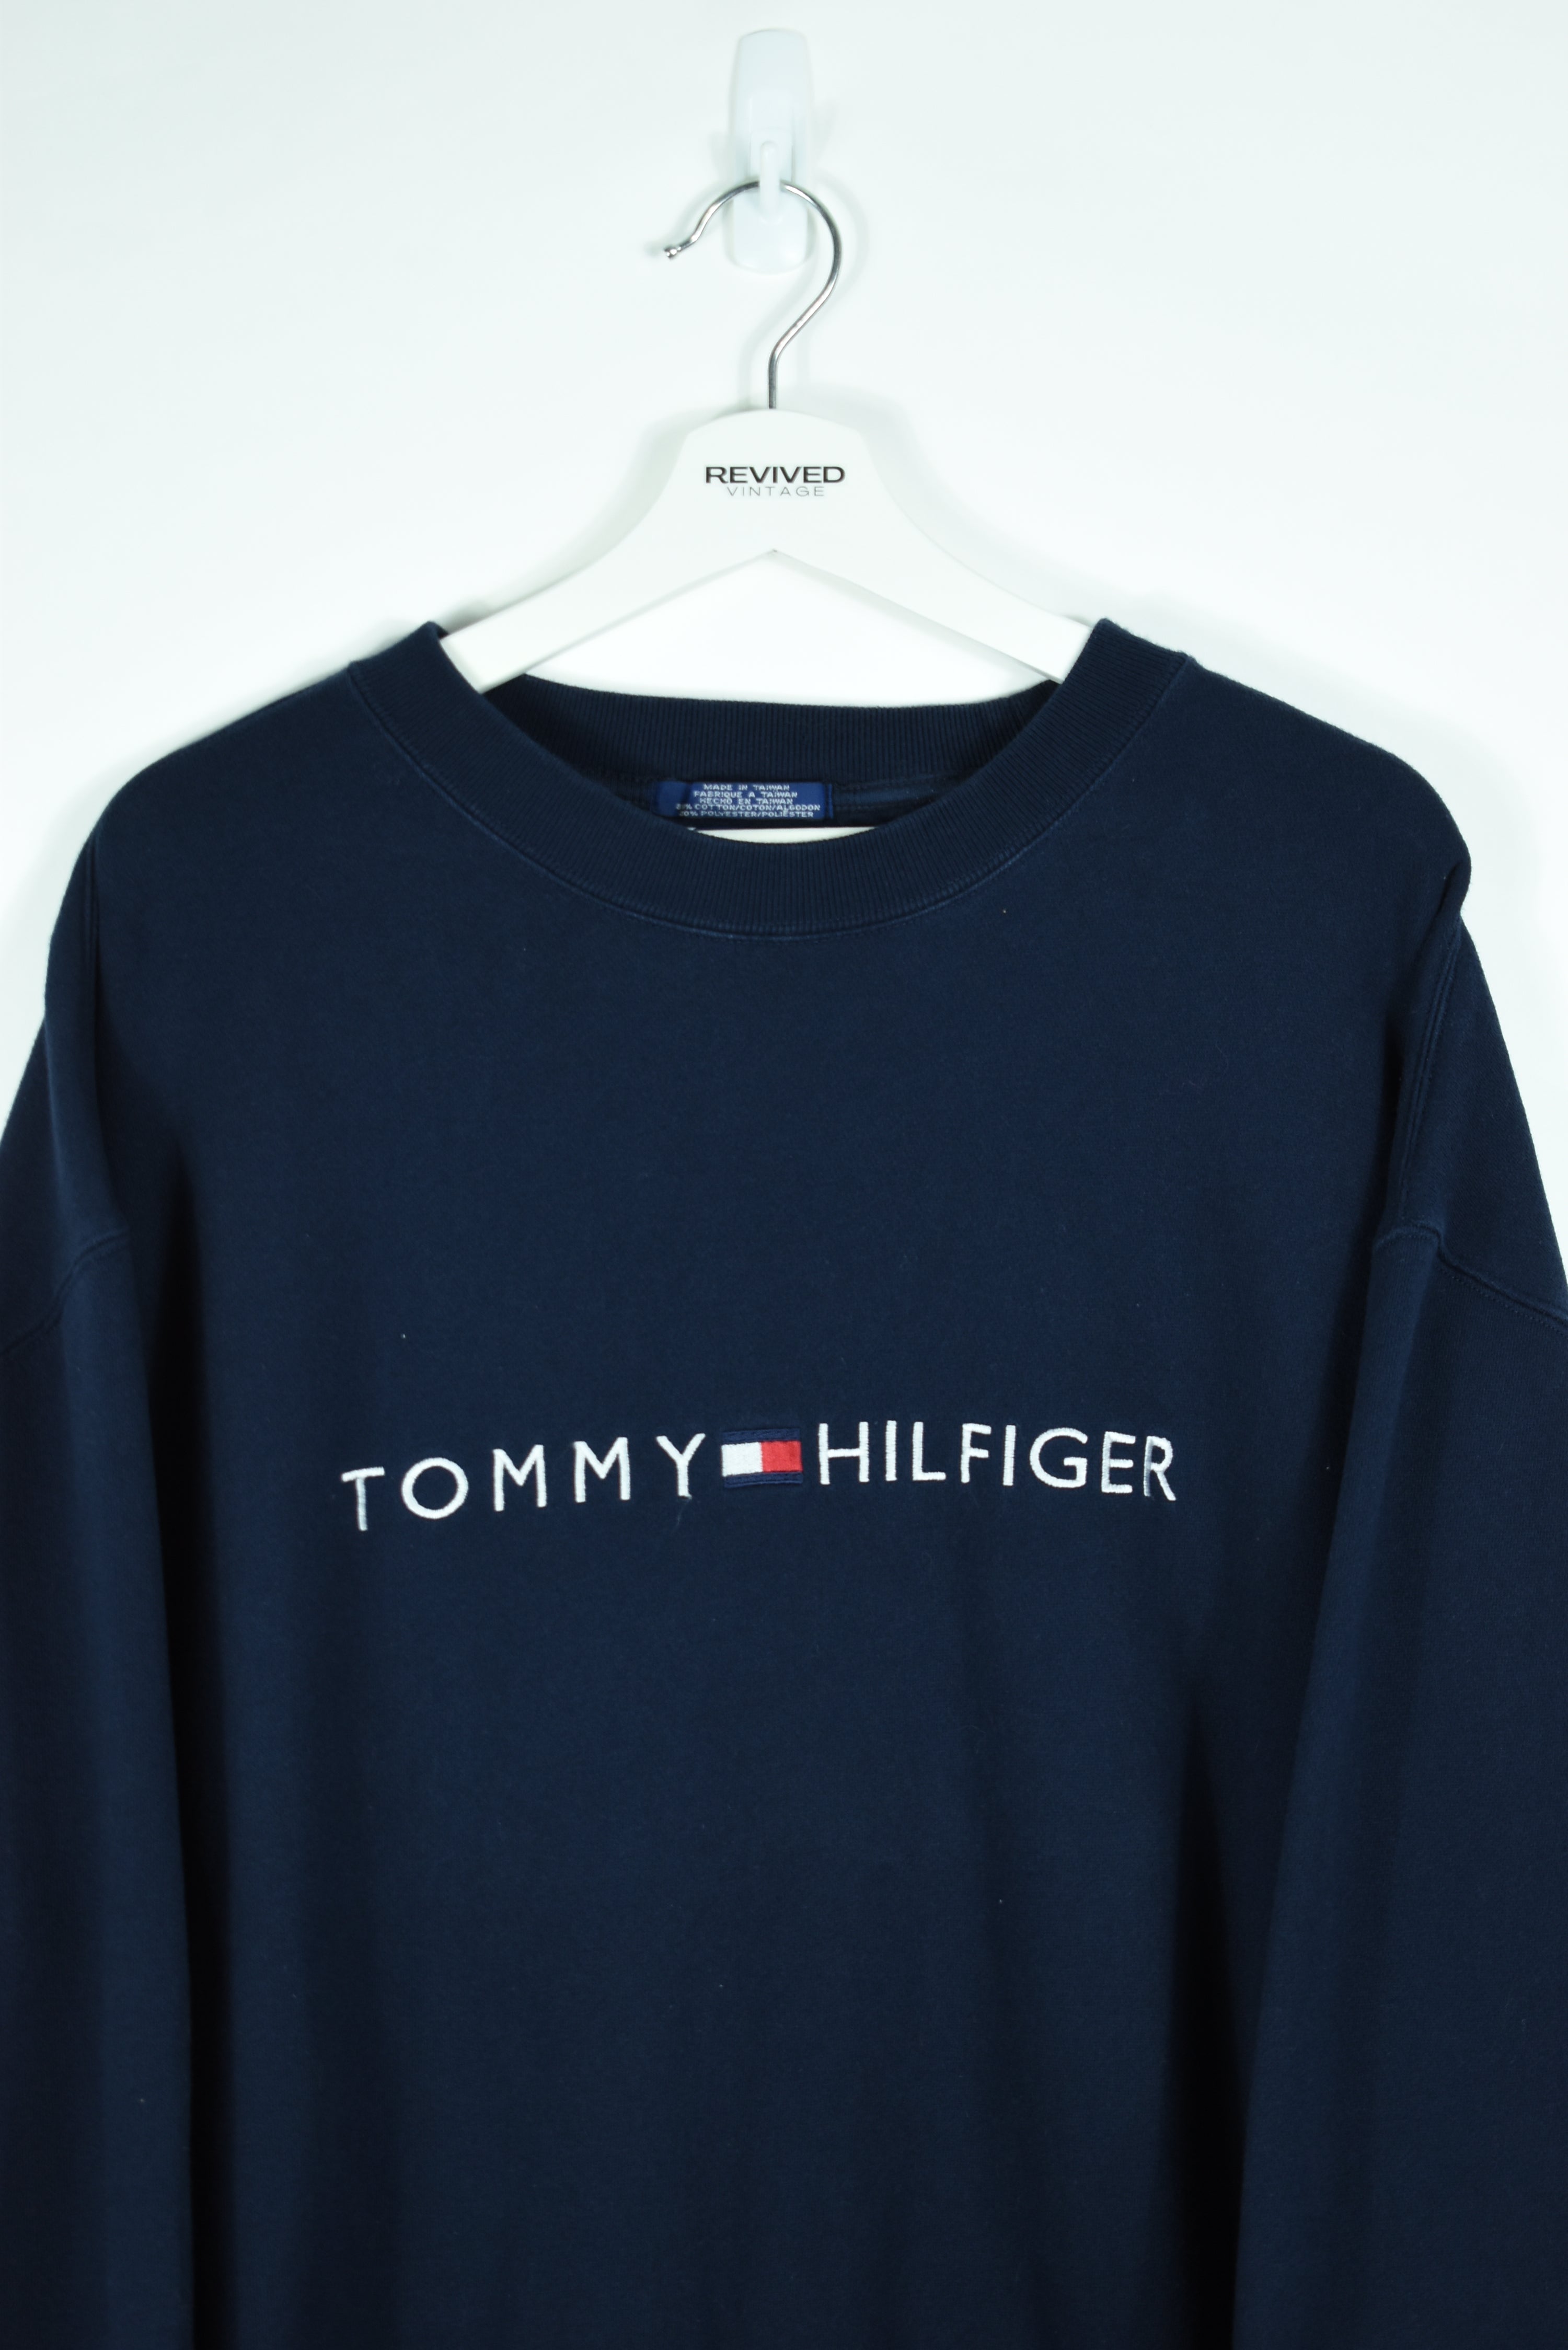 Vintage Tommy Hilfiger Embroidery Sweatshirt XXL